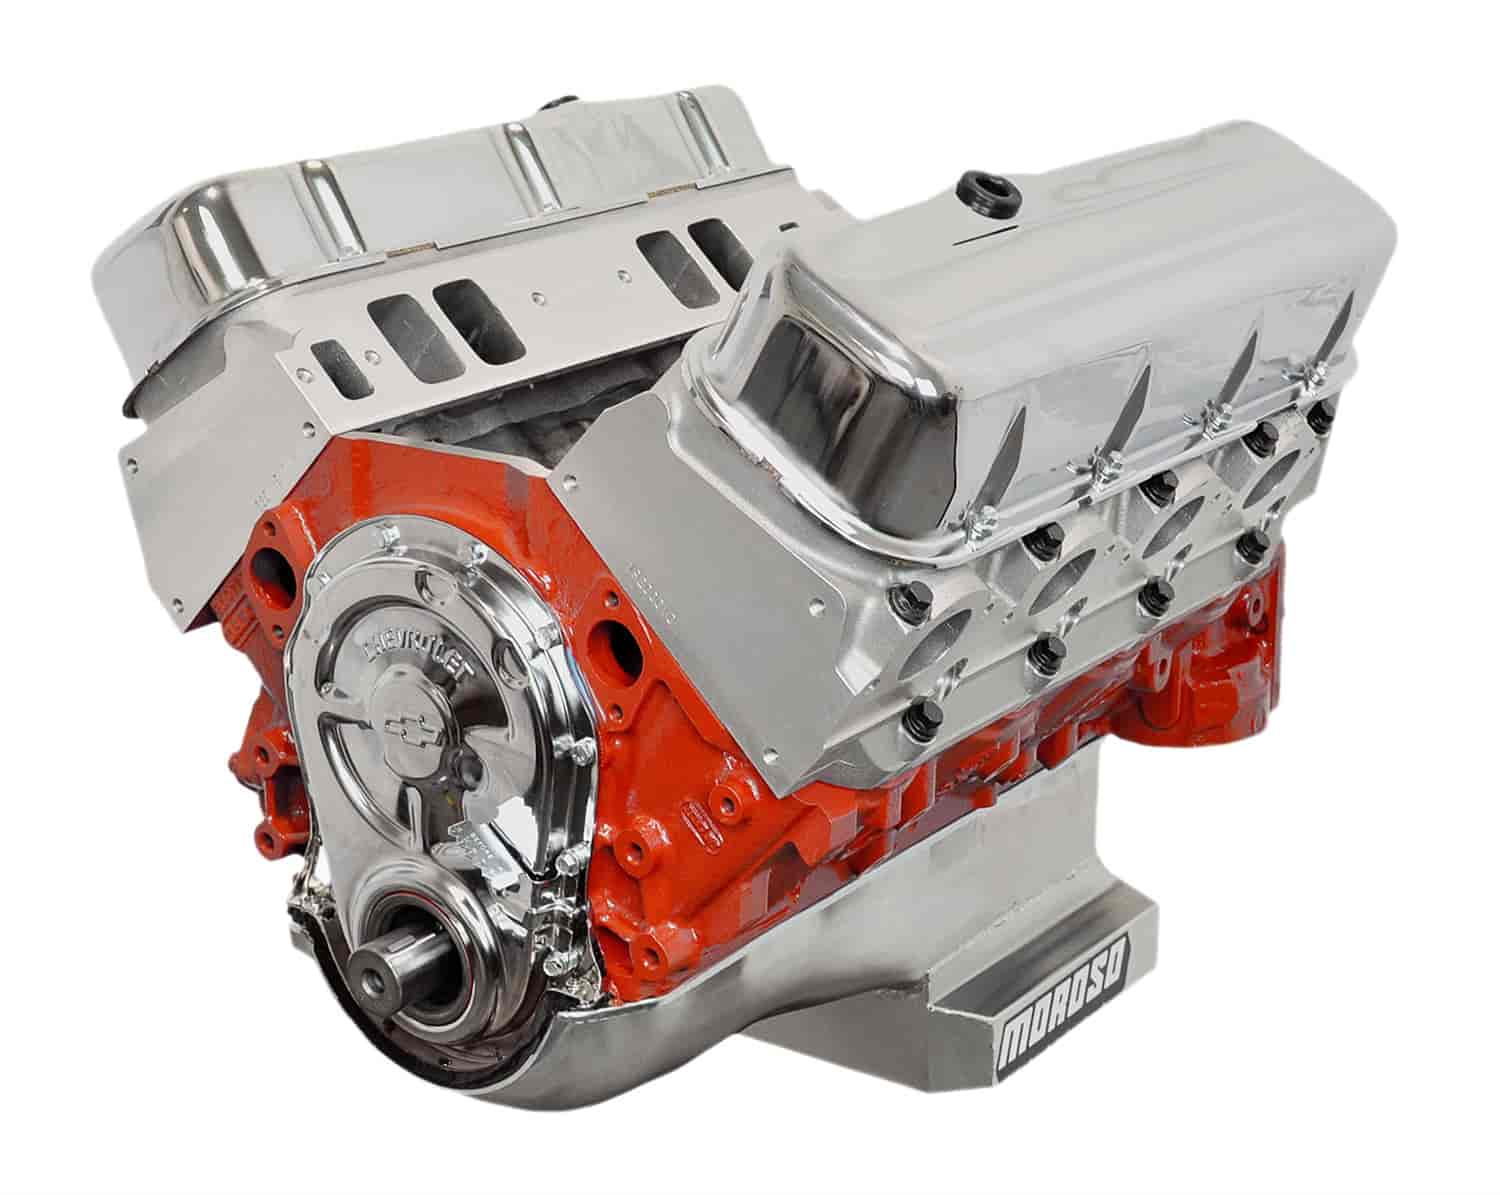 High Performance Crate Engine Big Block Chevy 540ci / 660HP / 650TQ